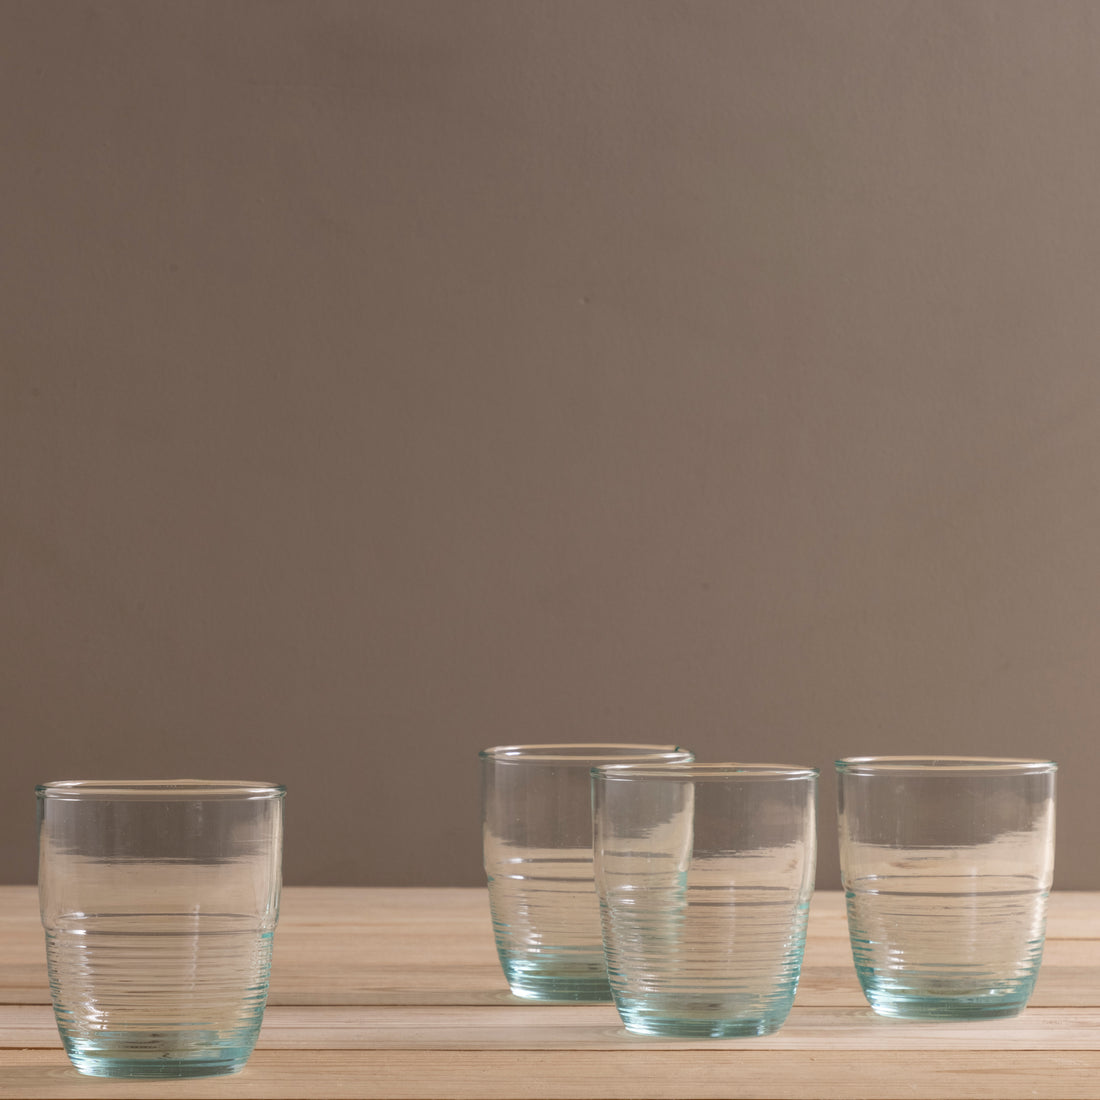 Ripple Water Glasses Set of 4